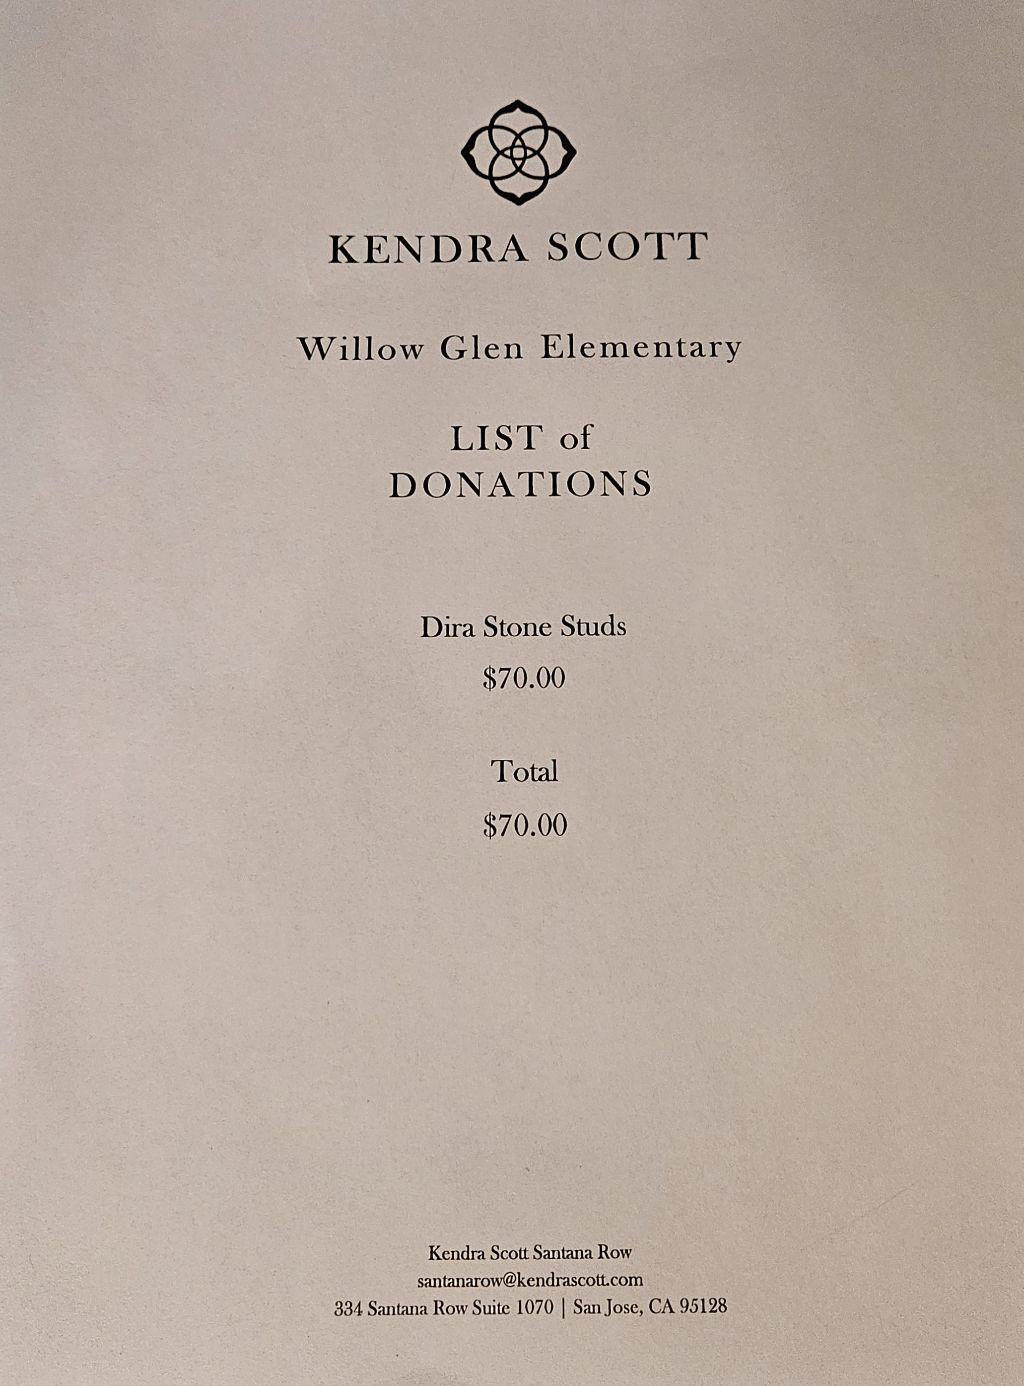 Kendra Scott - Necklace and Earrings from Kendra Scott